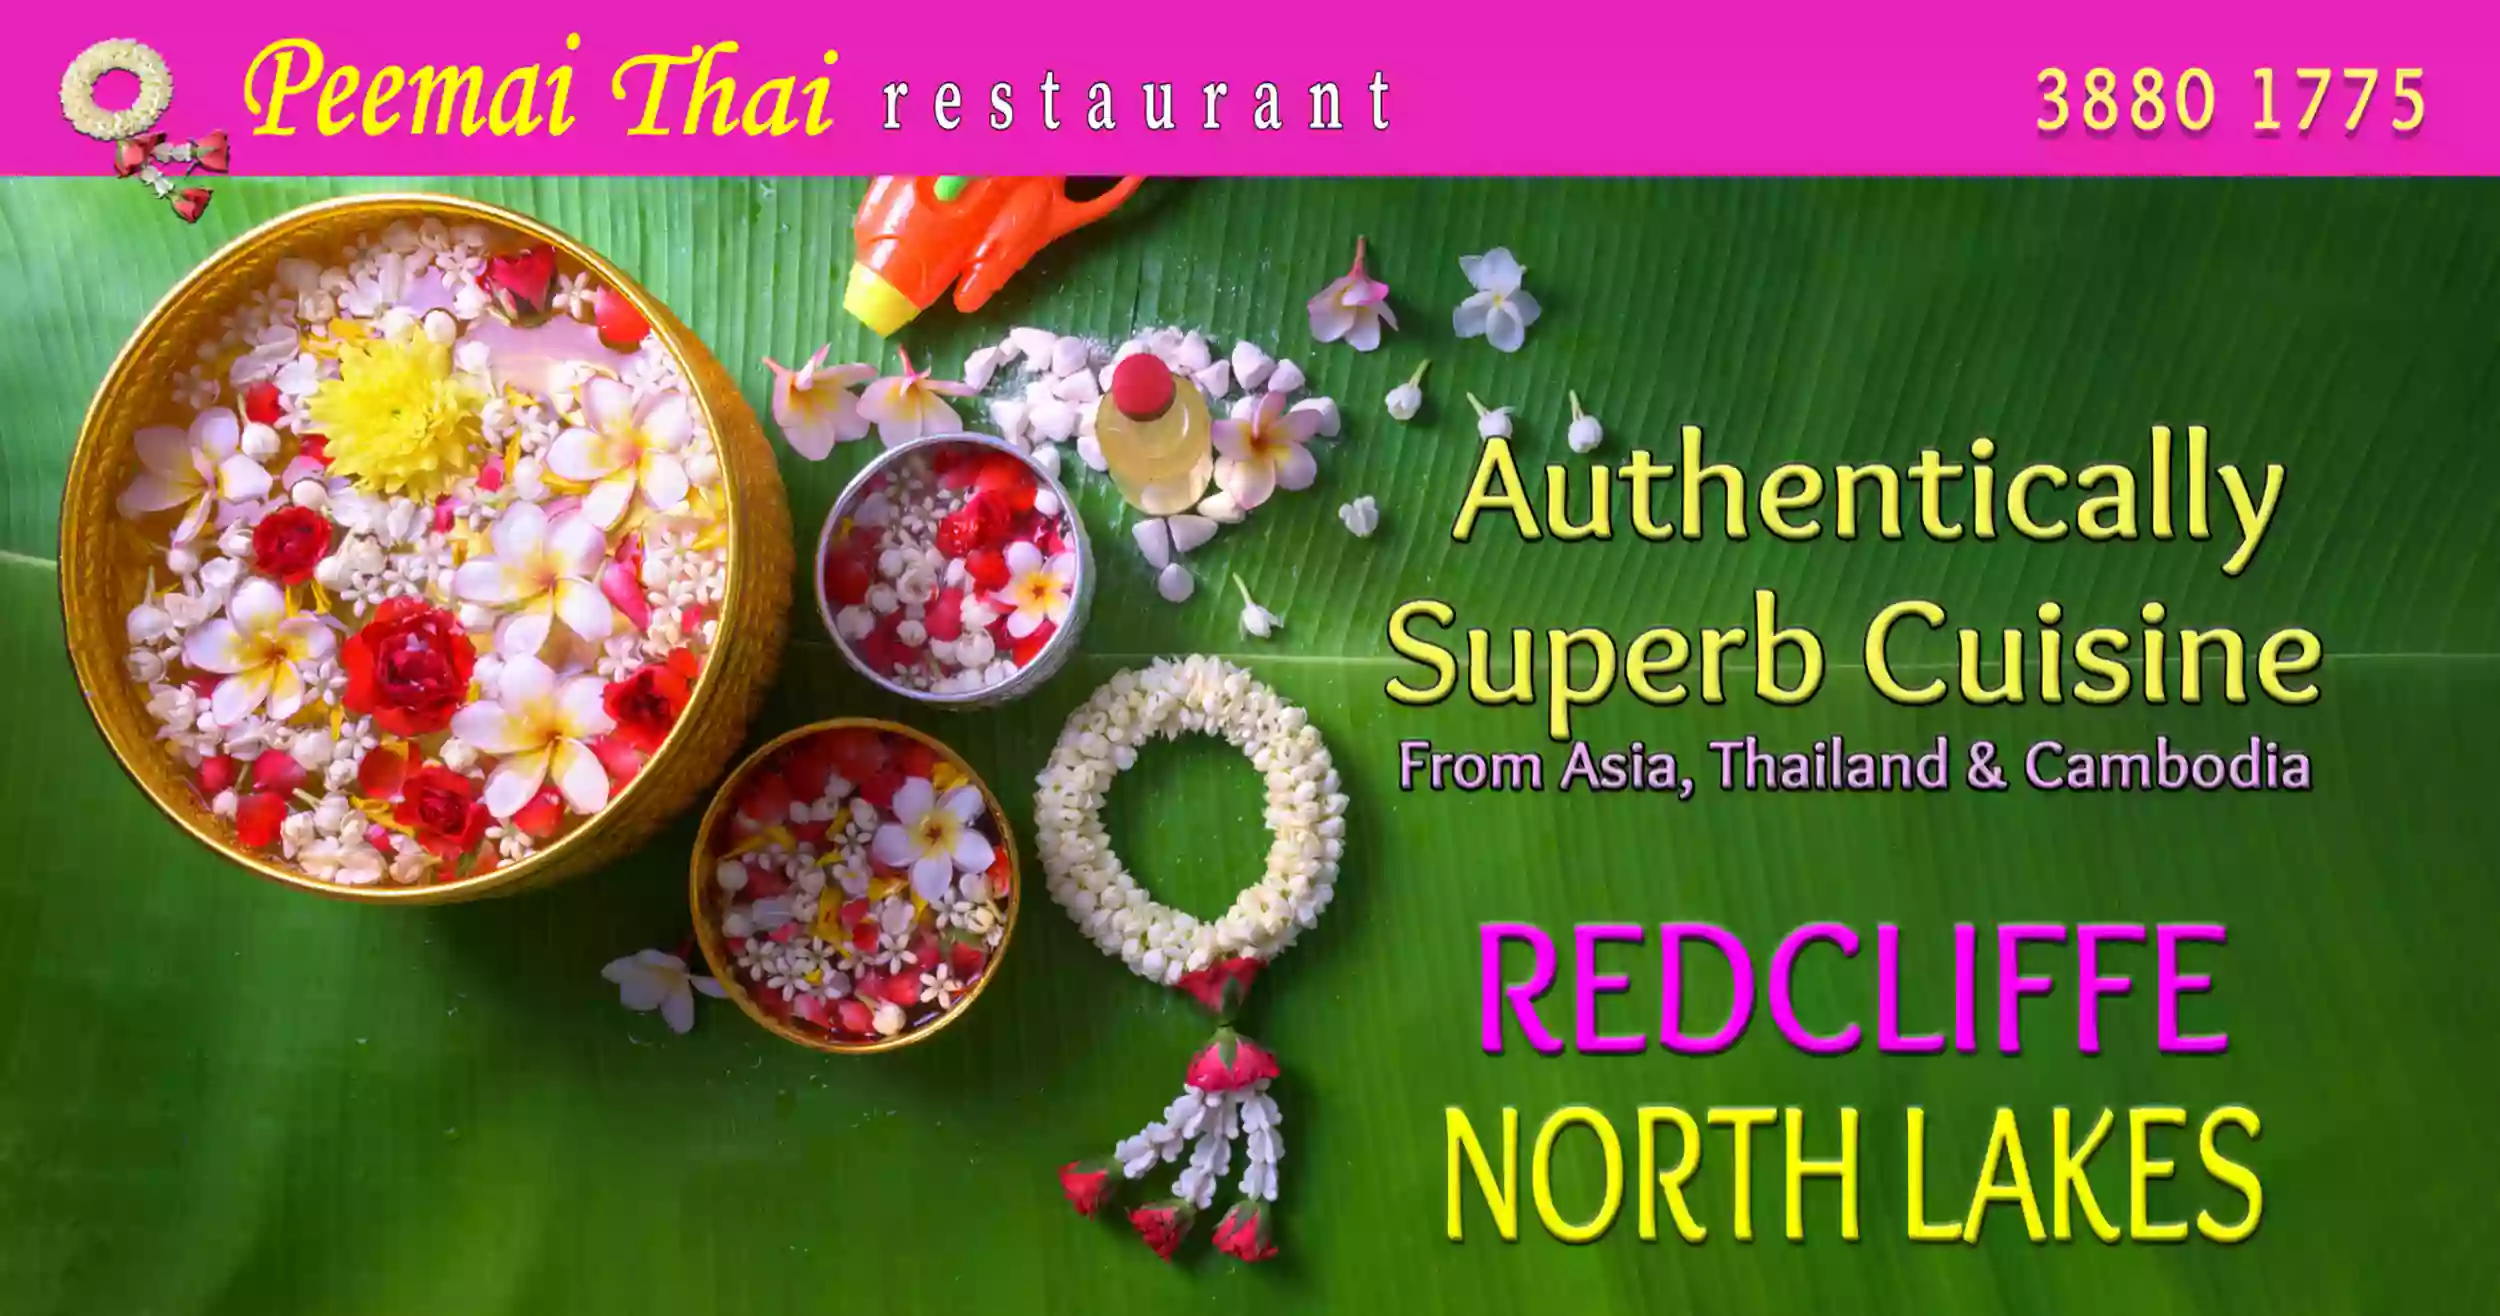 Peemai Thai Restaurant / NORTH LAKES